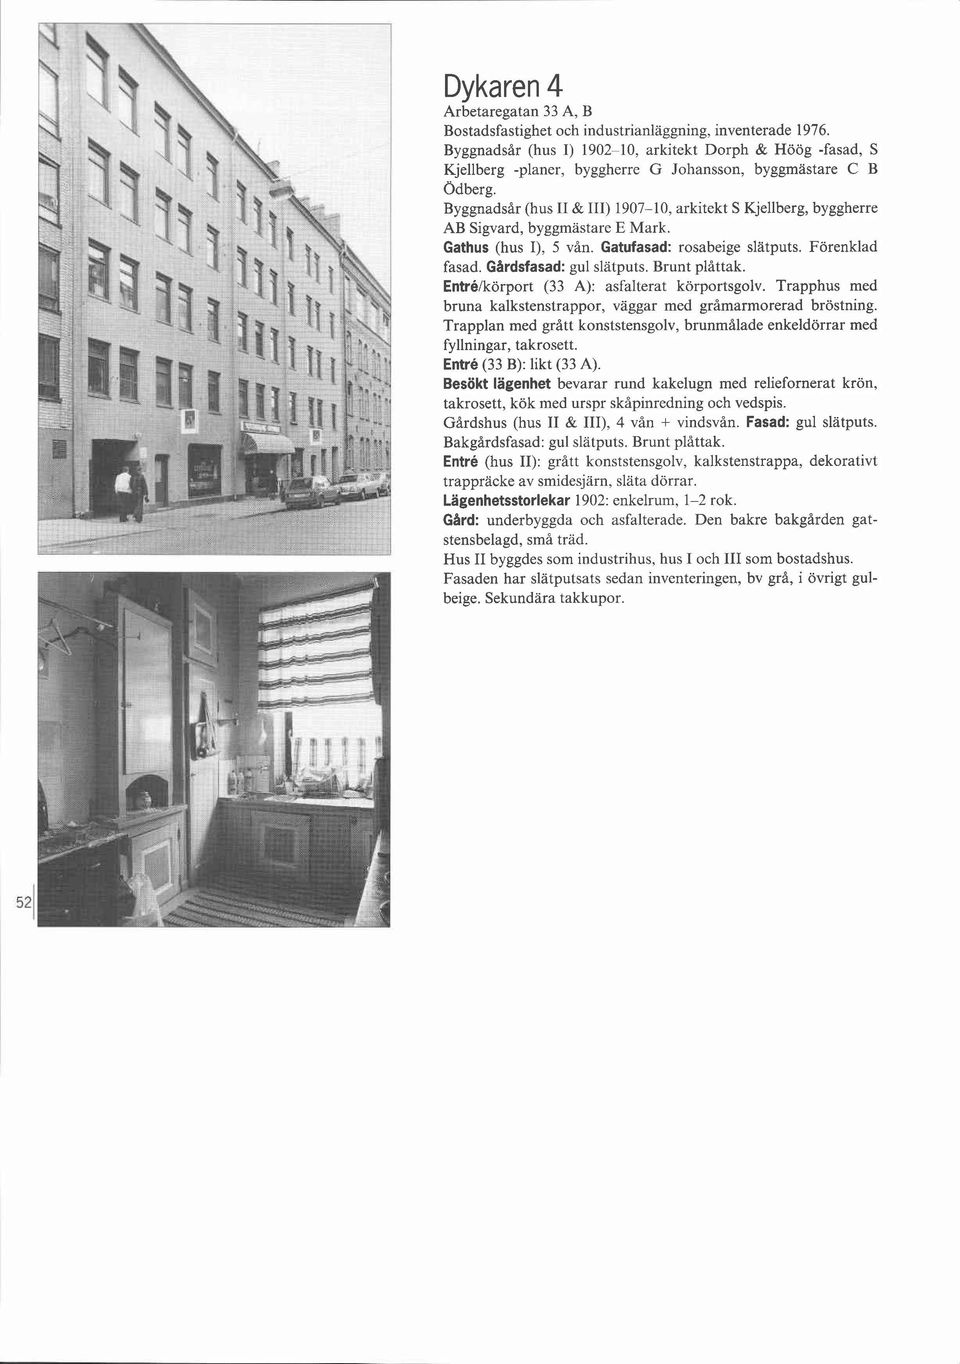 Byggnadsår (hus II & III) 1907-10, arkitekt S Kjellberg, byggherre AB Sigvard, byggmästare E Mark. Gathus (hus I), 5 vån. Gatufasad: rosabeige slatputs. Förenklad fasad. Gardsfasad: gul slatputs.